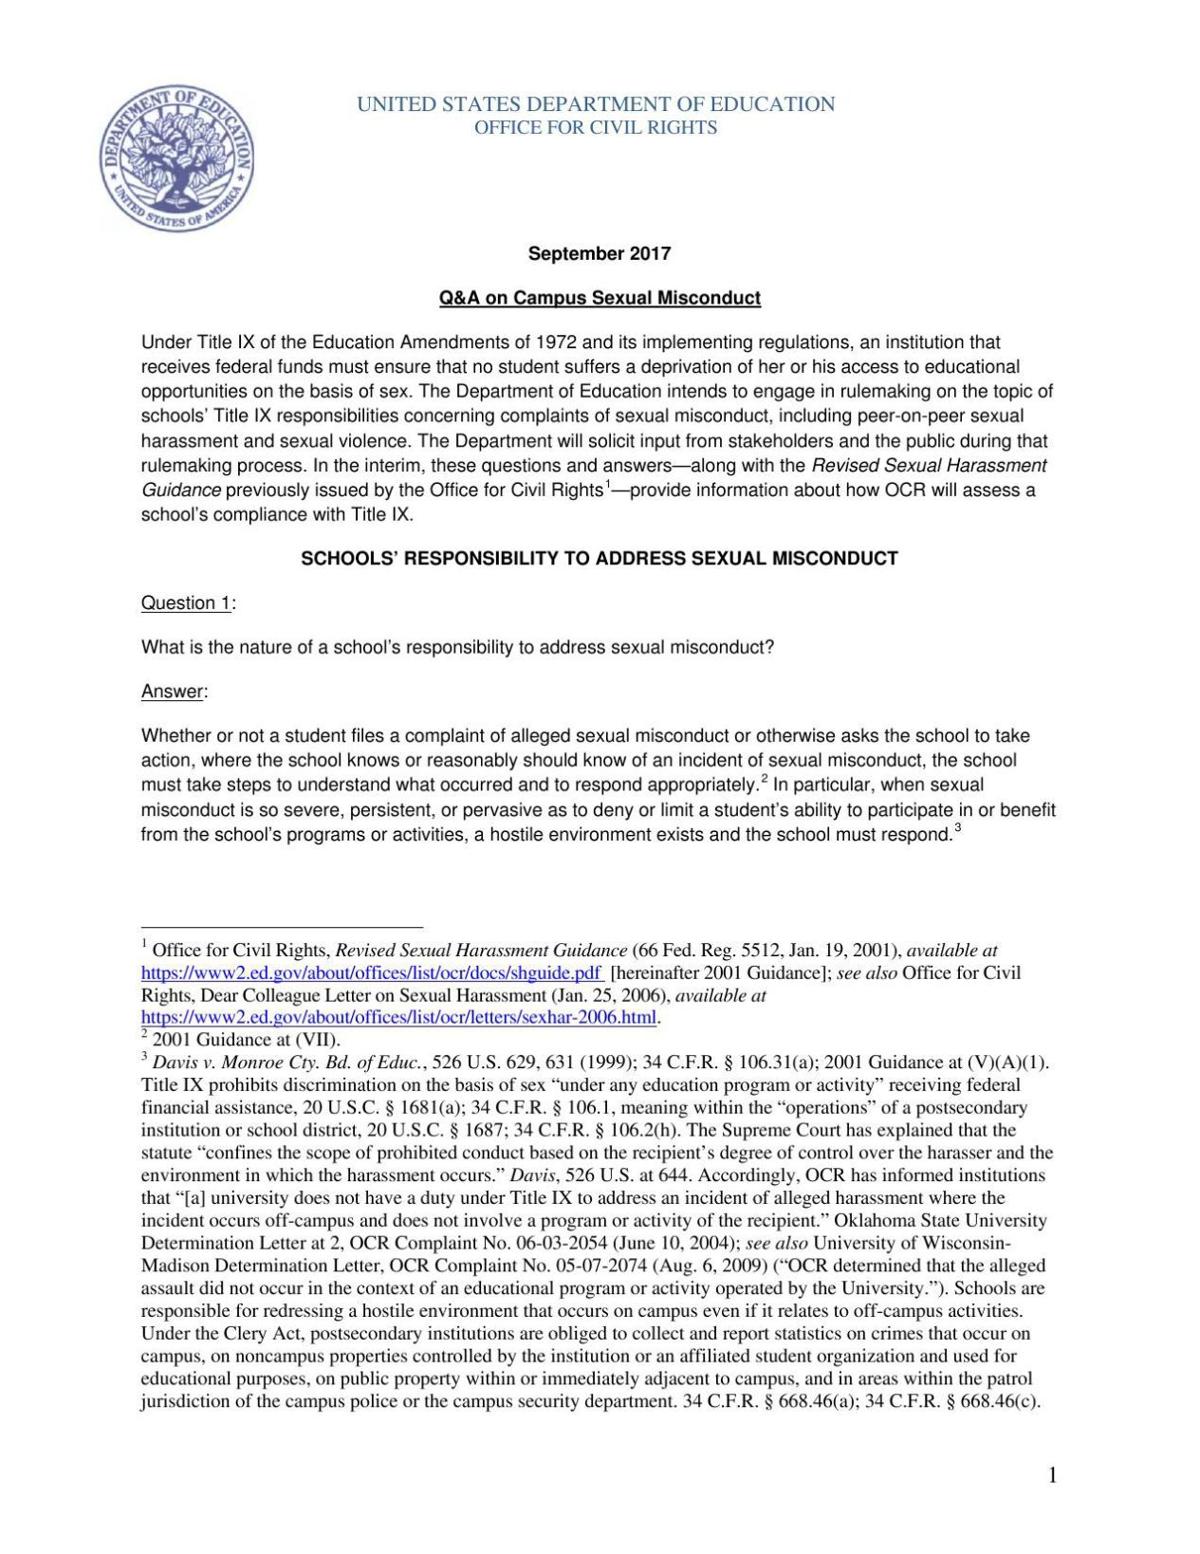 The U.S. Department of Education's interim Title IX guidance